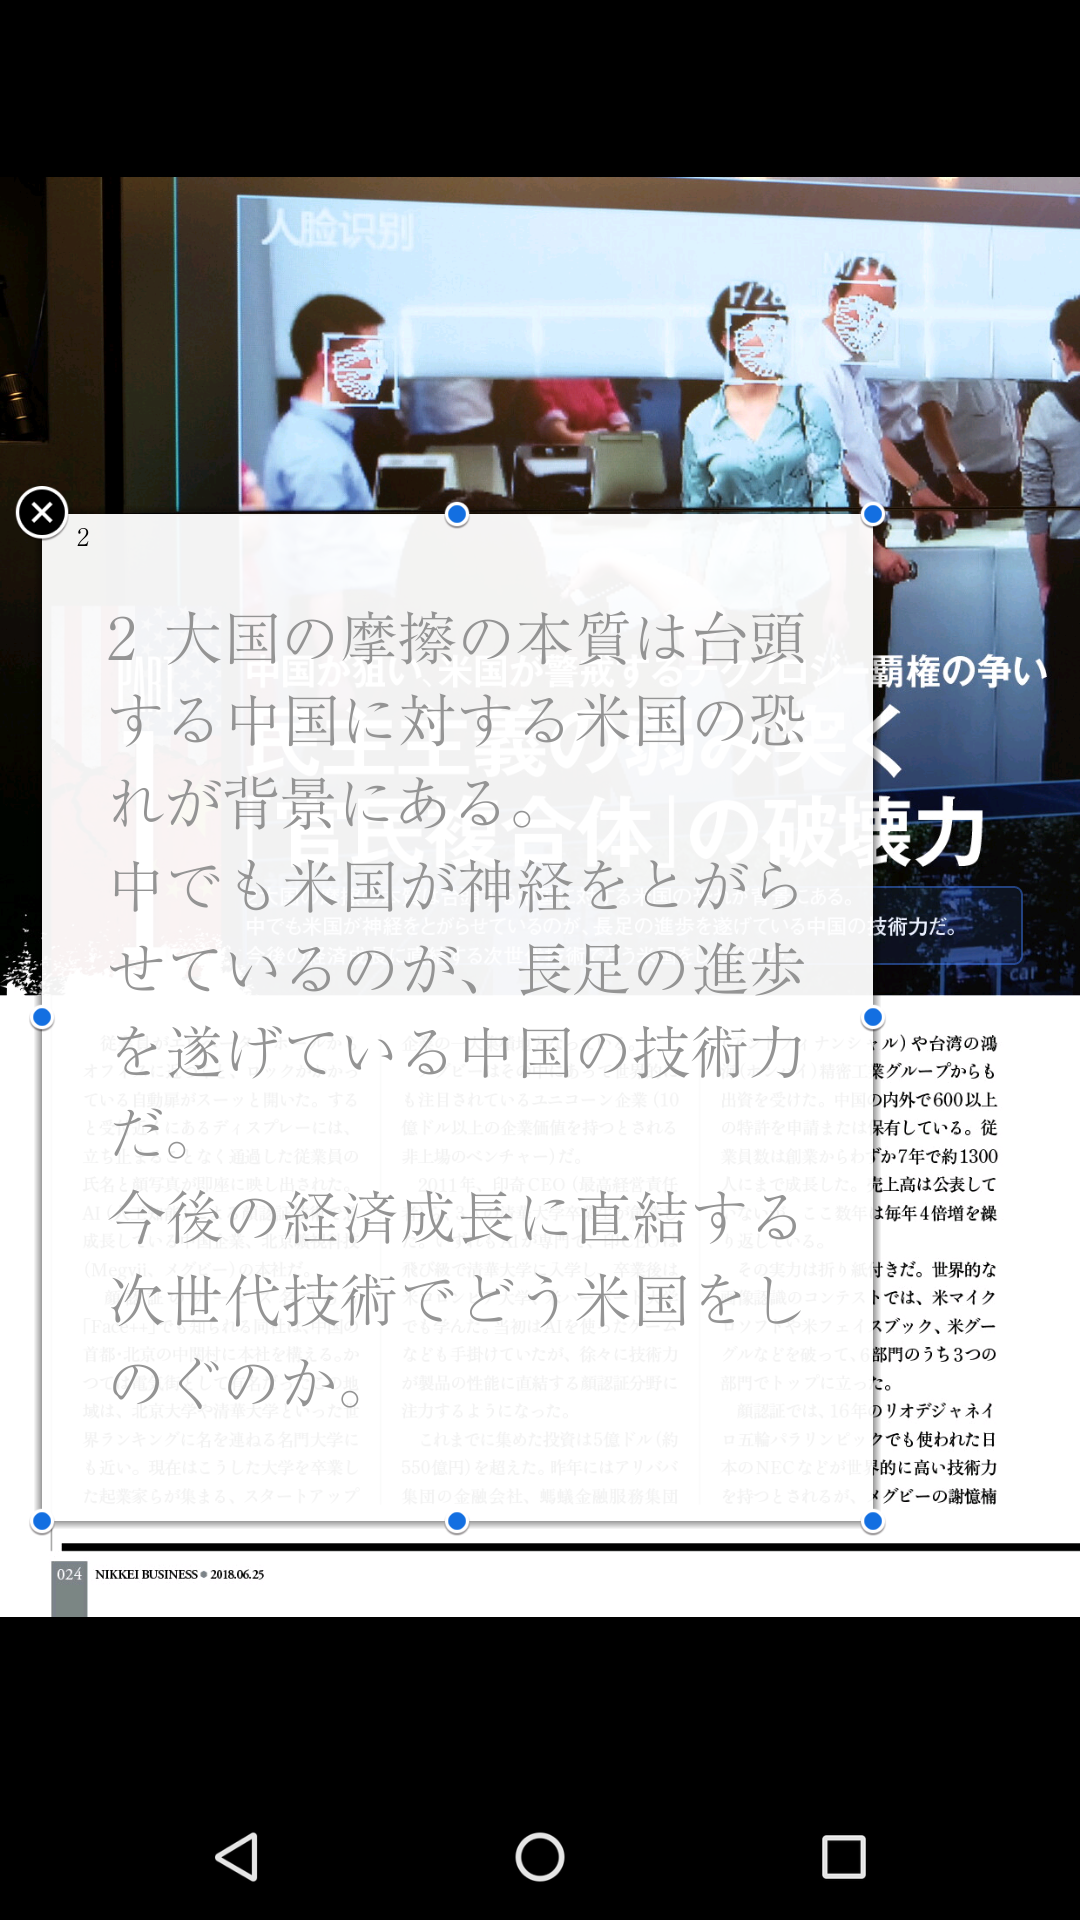 Android application 日経ビジネス誌面ビューアー screenshort